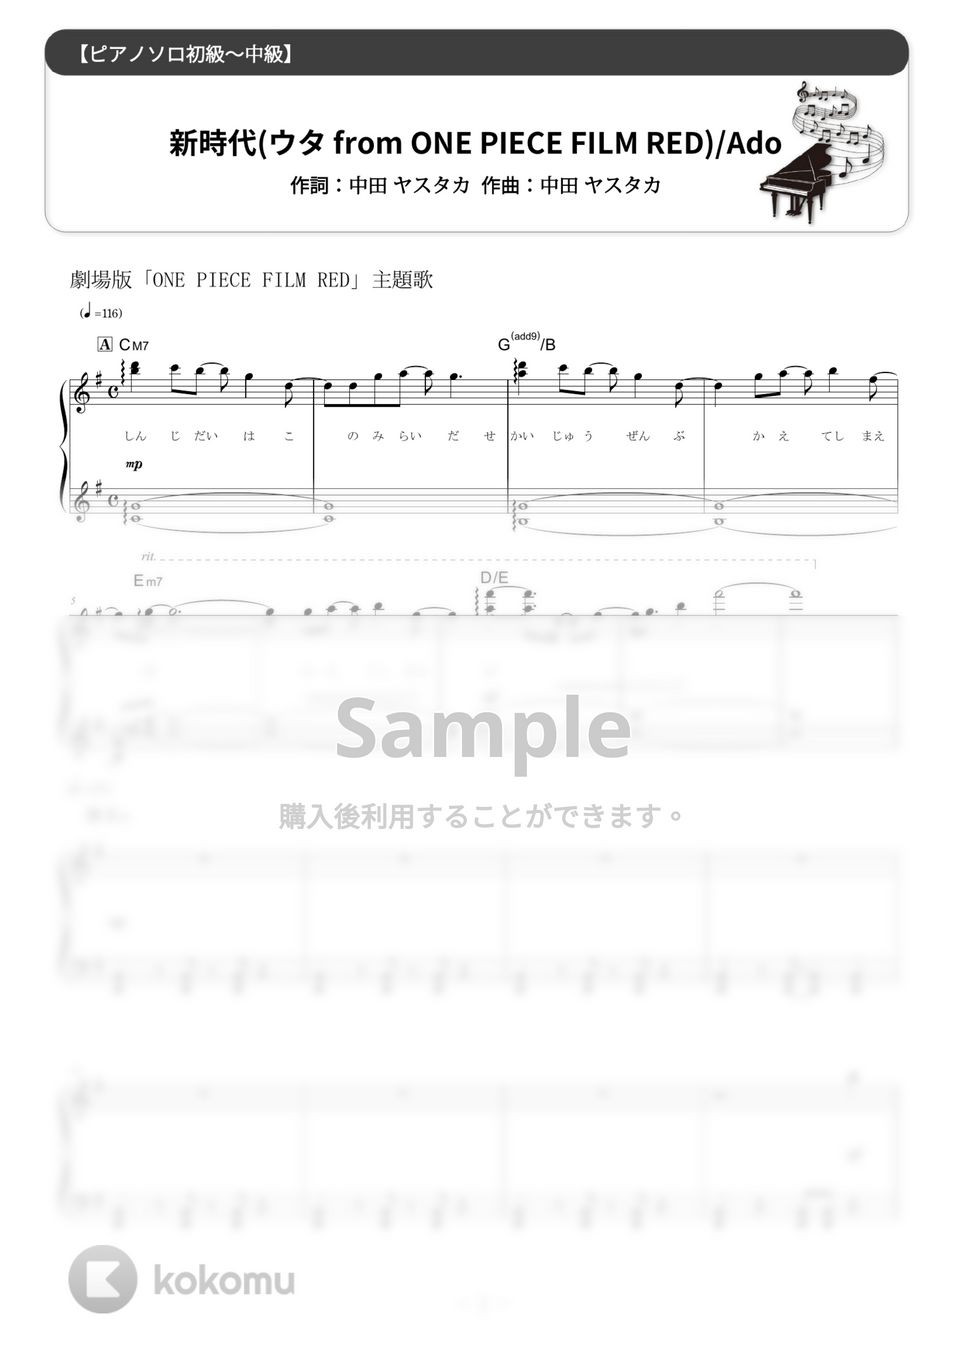 Ado - 新時代 (難易度：★★☆☆☆/映画『ONE PIECE FILM RED』主題歌) by Dさん